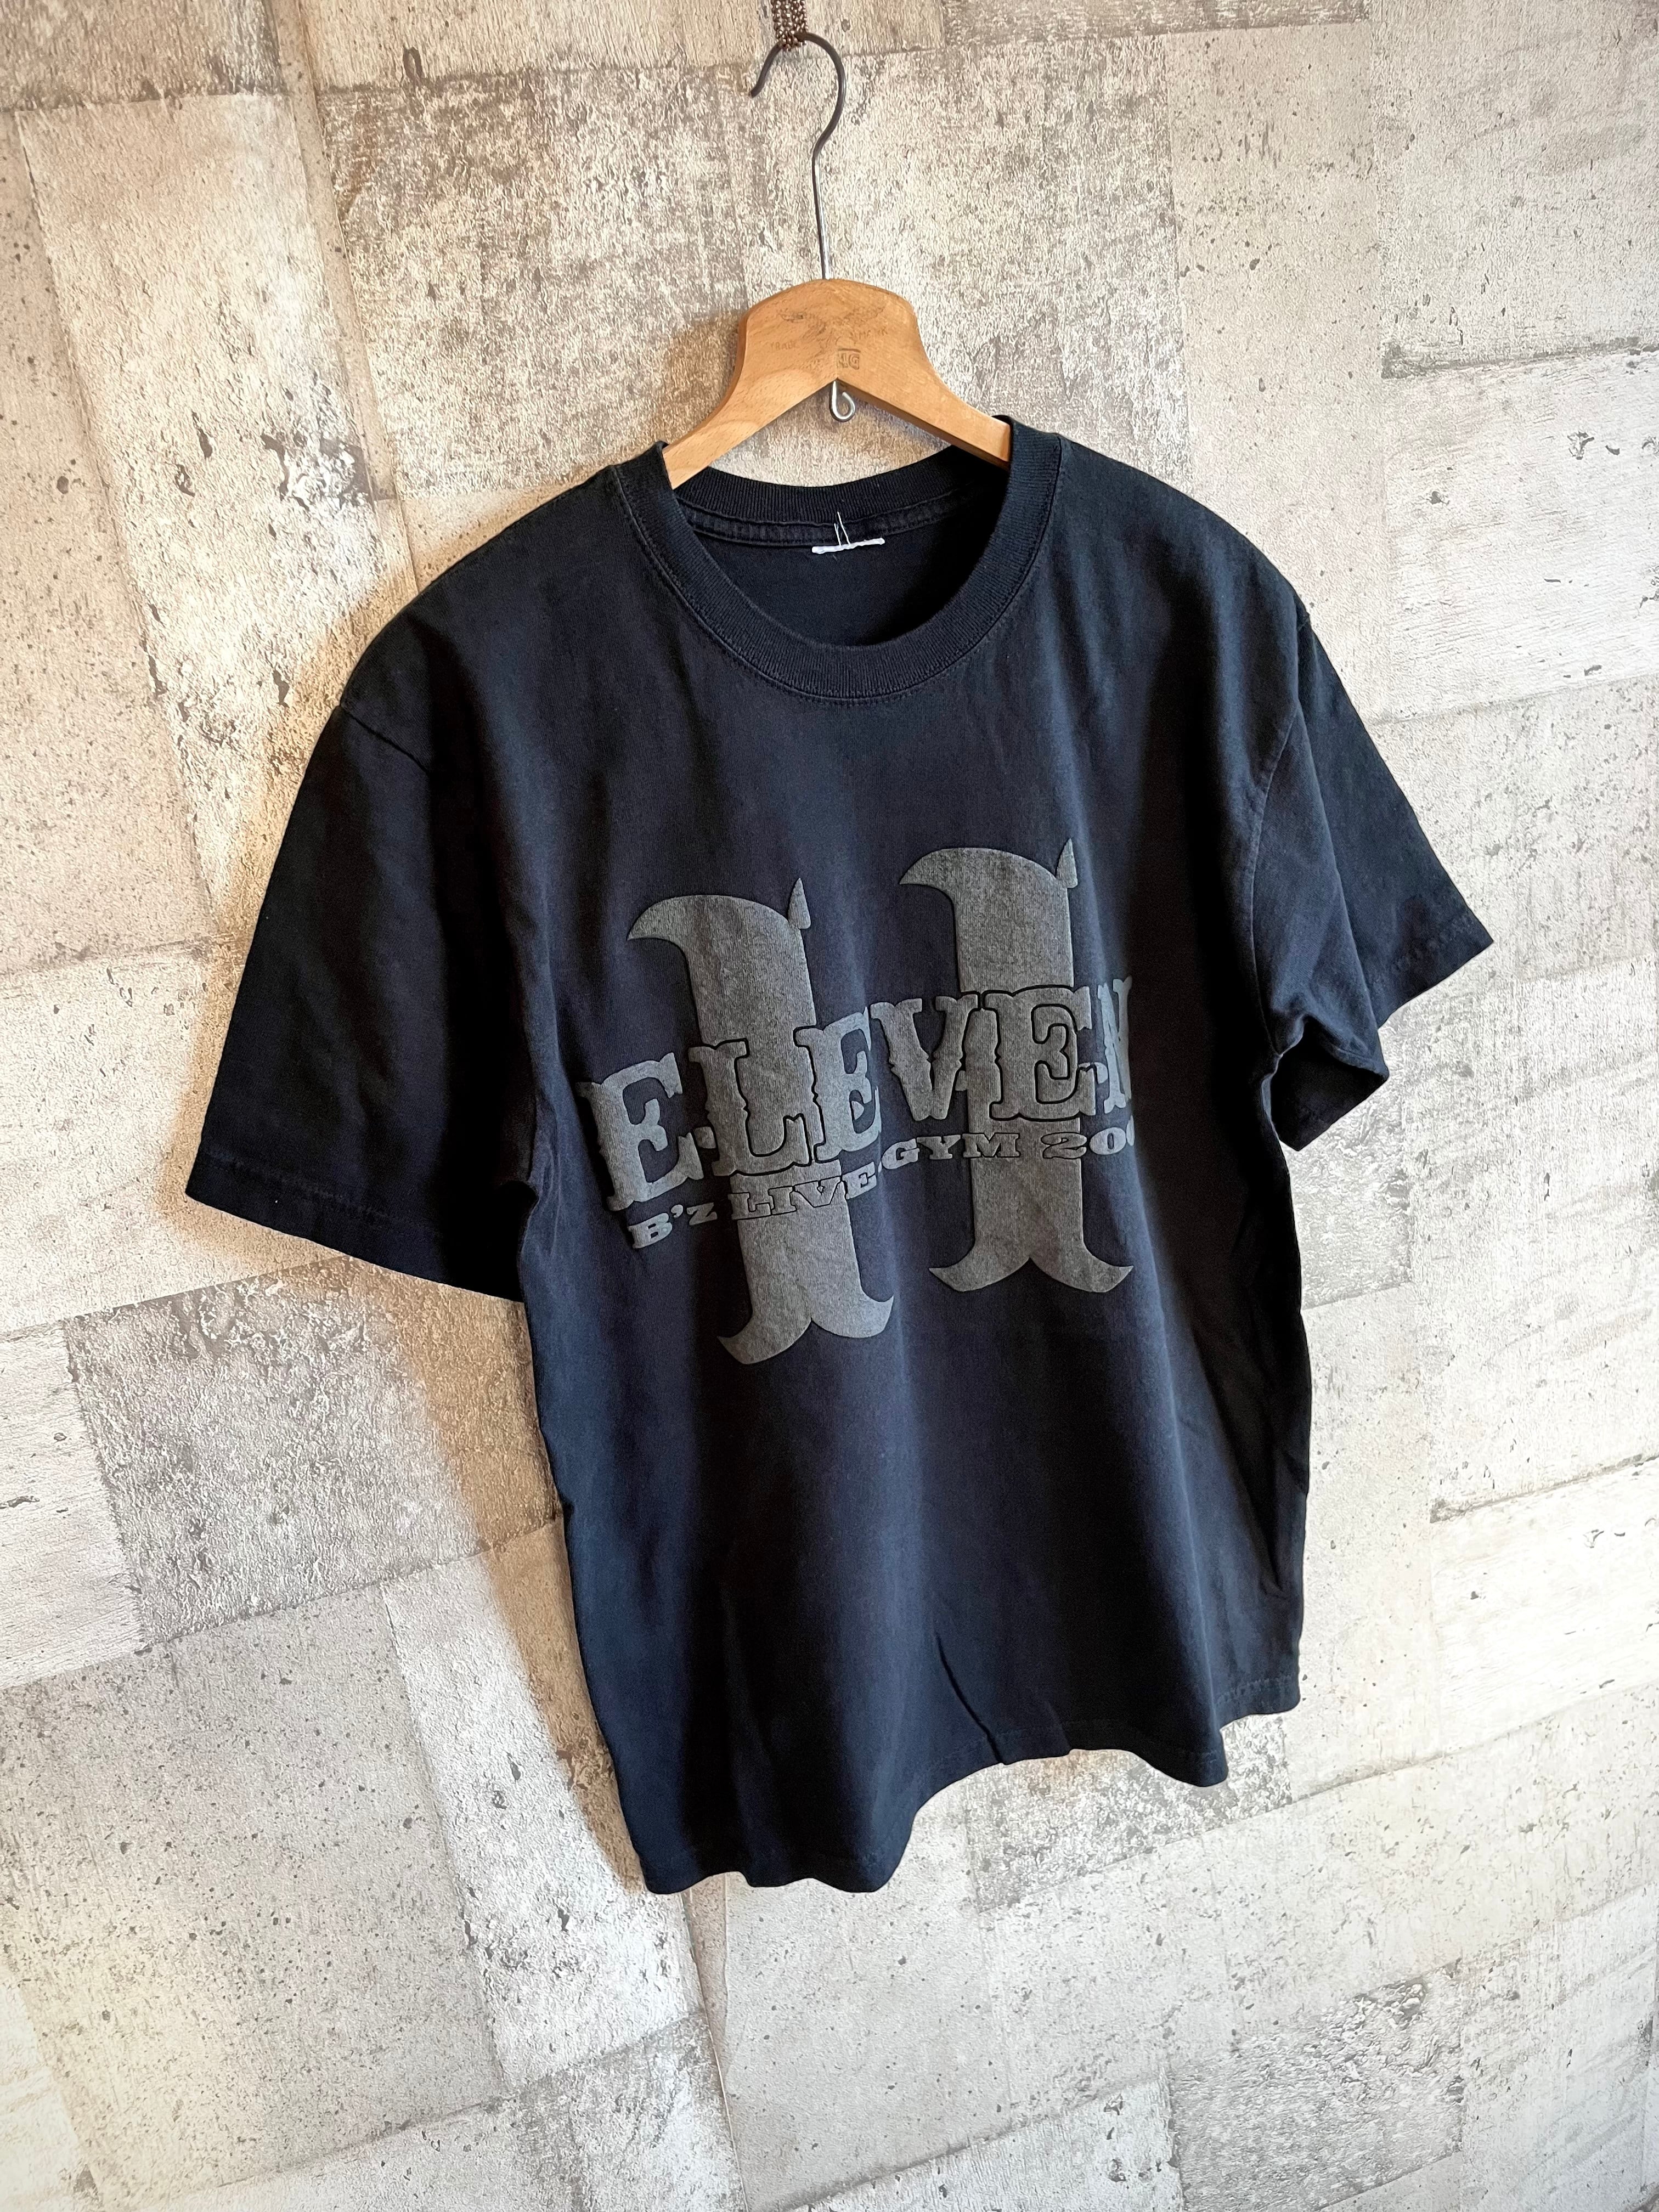 01s B’z ELEVEN LIVE GYM PRINT TEE OLD VINTAGE 2001年 Bz ライブ ツアーTシャツ オールド  ビンテージ